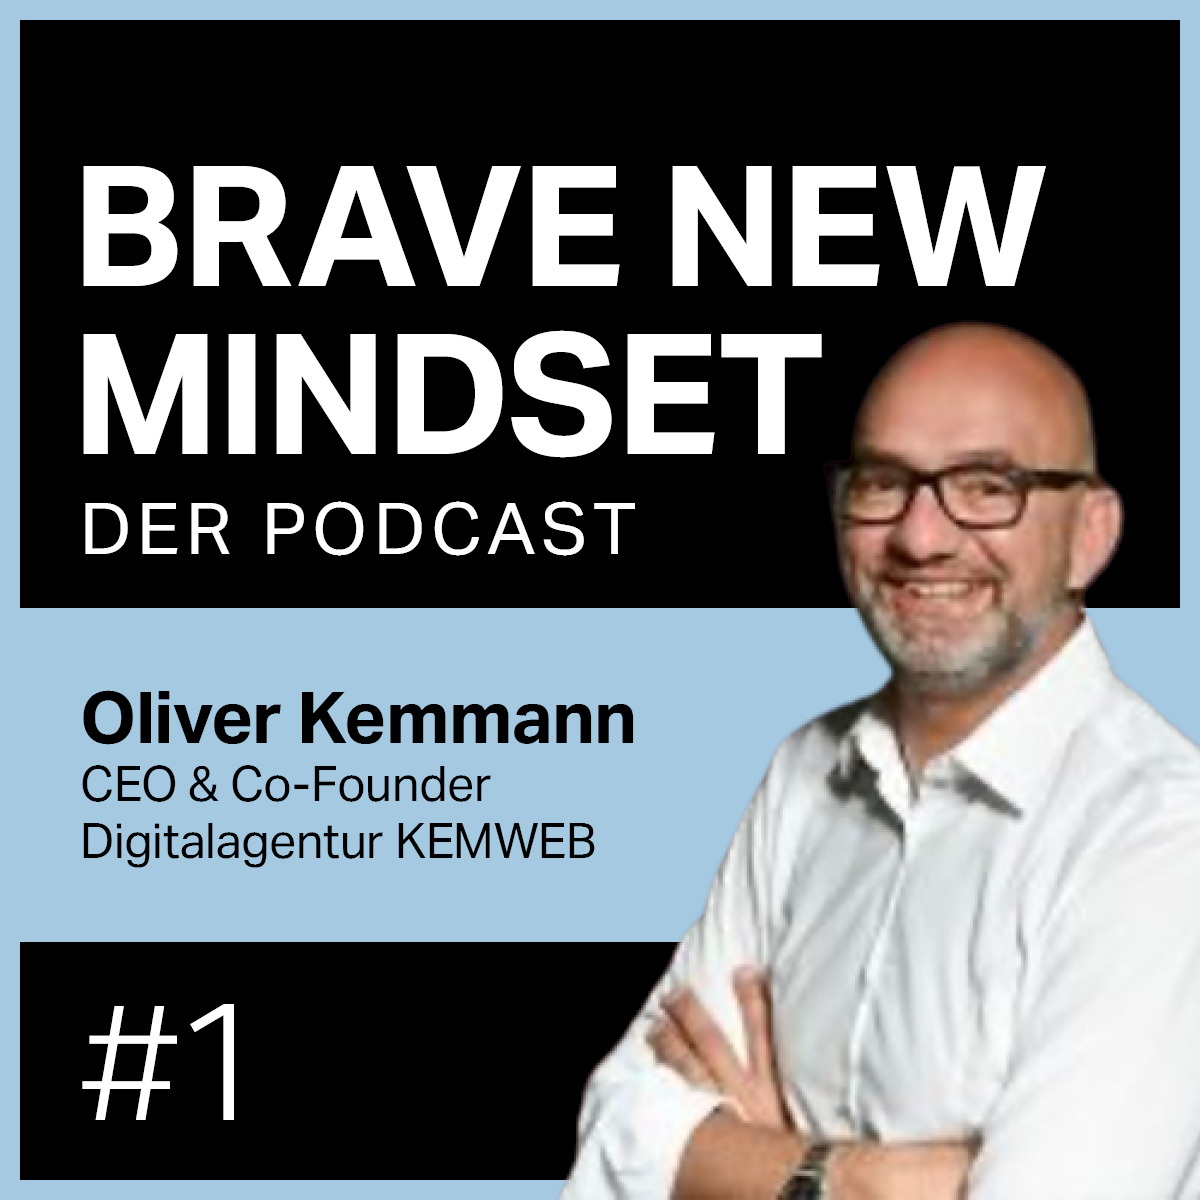 #01 Oliver Kemmann | CEO & Co-Founder KEMWEB, Digitalagentur